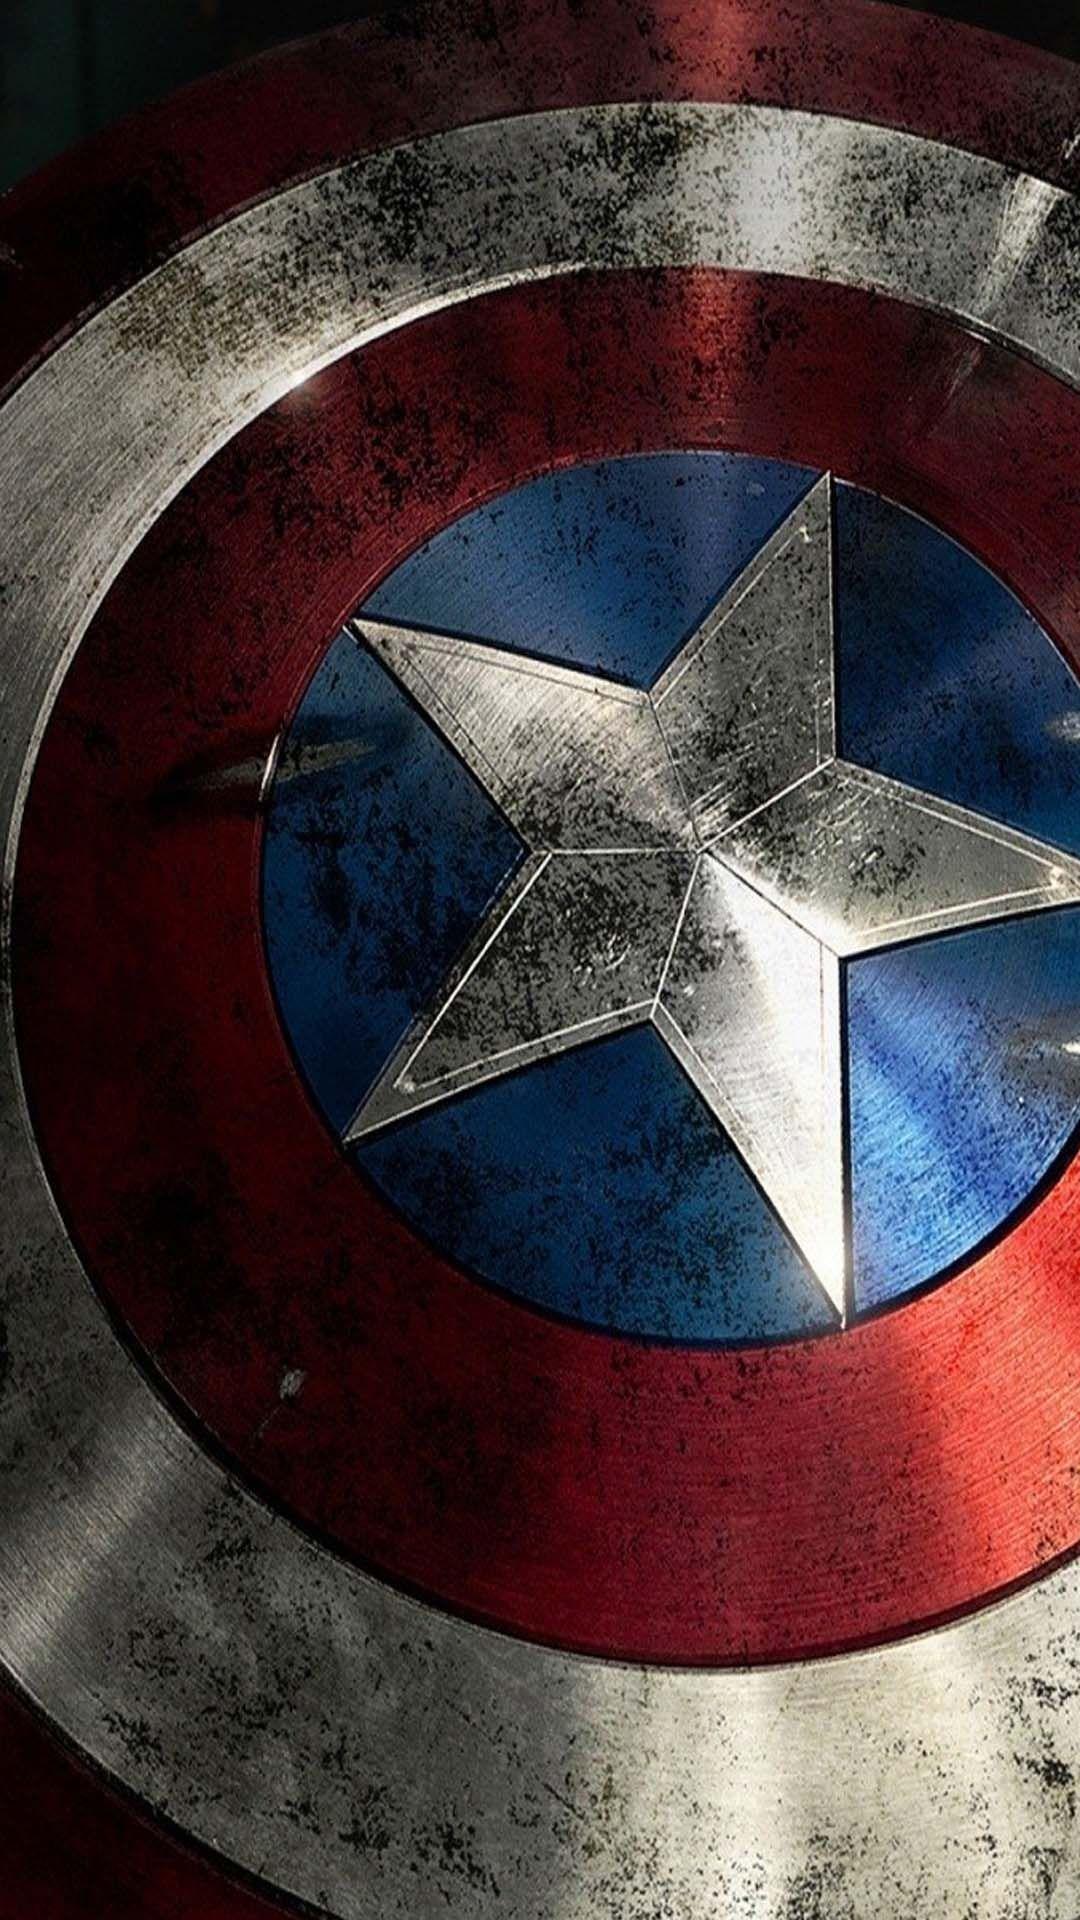 New iPhone Wallpaper. iPhone Wallpaper. Captain america shield wallpaper, Captain america wallpaper, Avengers wallpaper